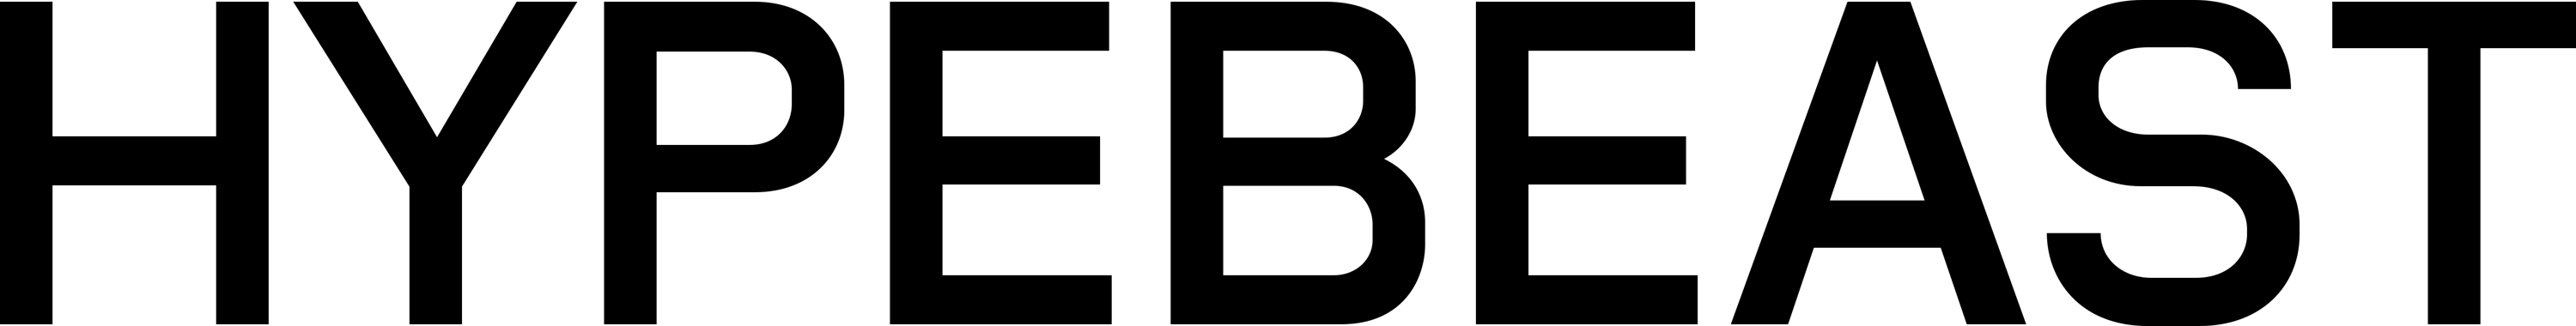 Hypebeast Logo